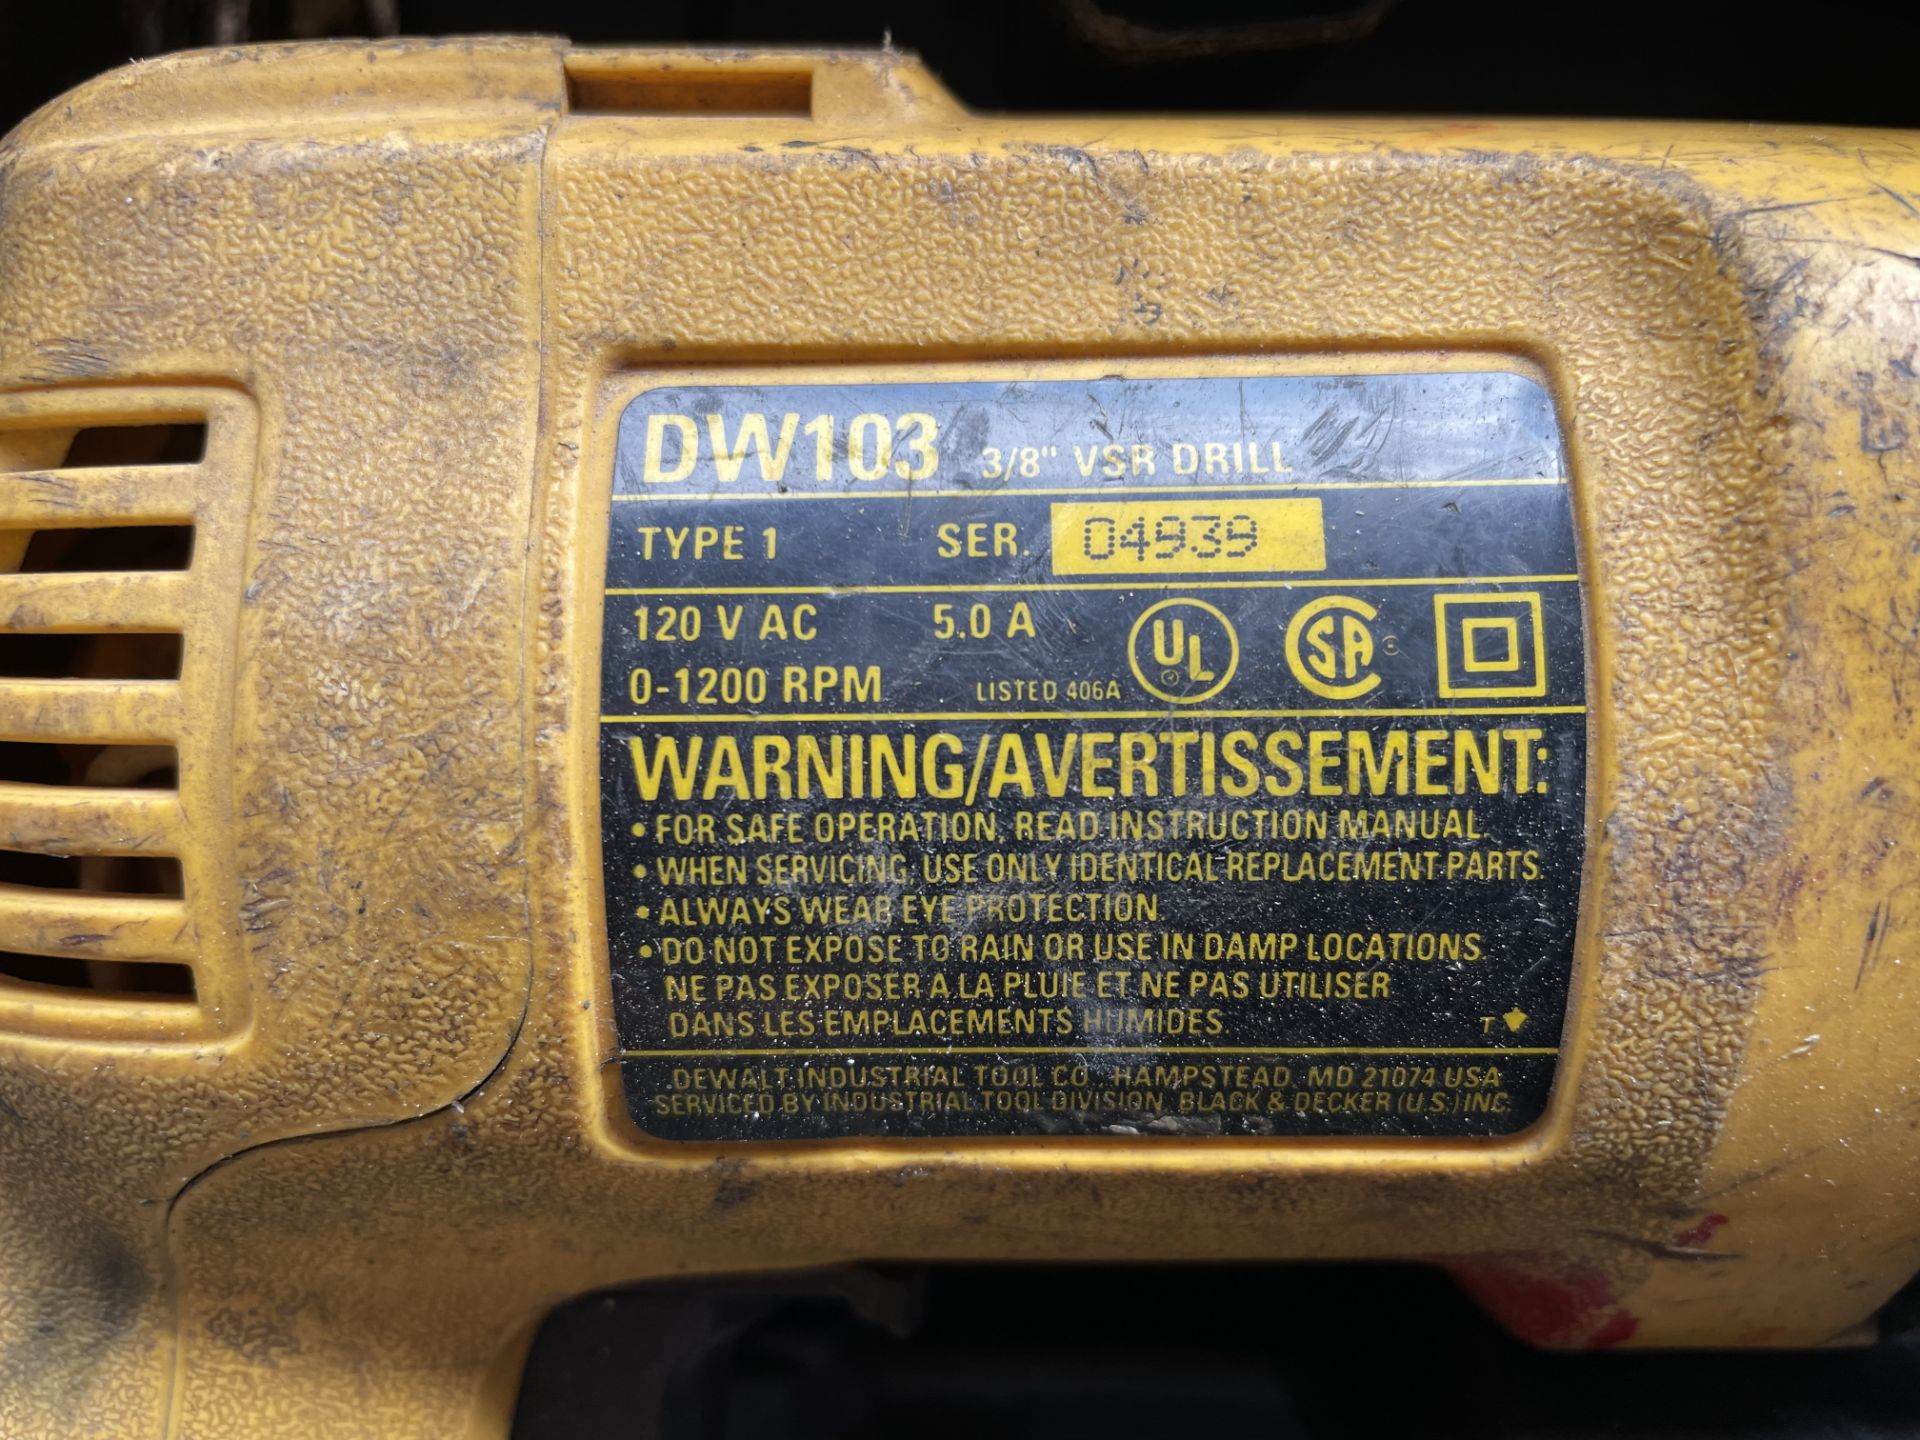 Dewalt Model DW103 3/8" VSR Drill w/Case - Image 2 of 2